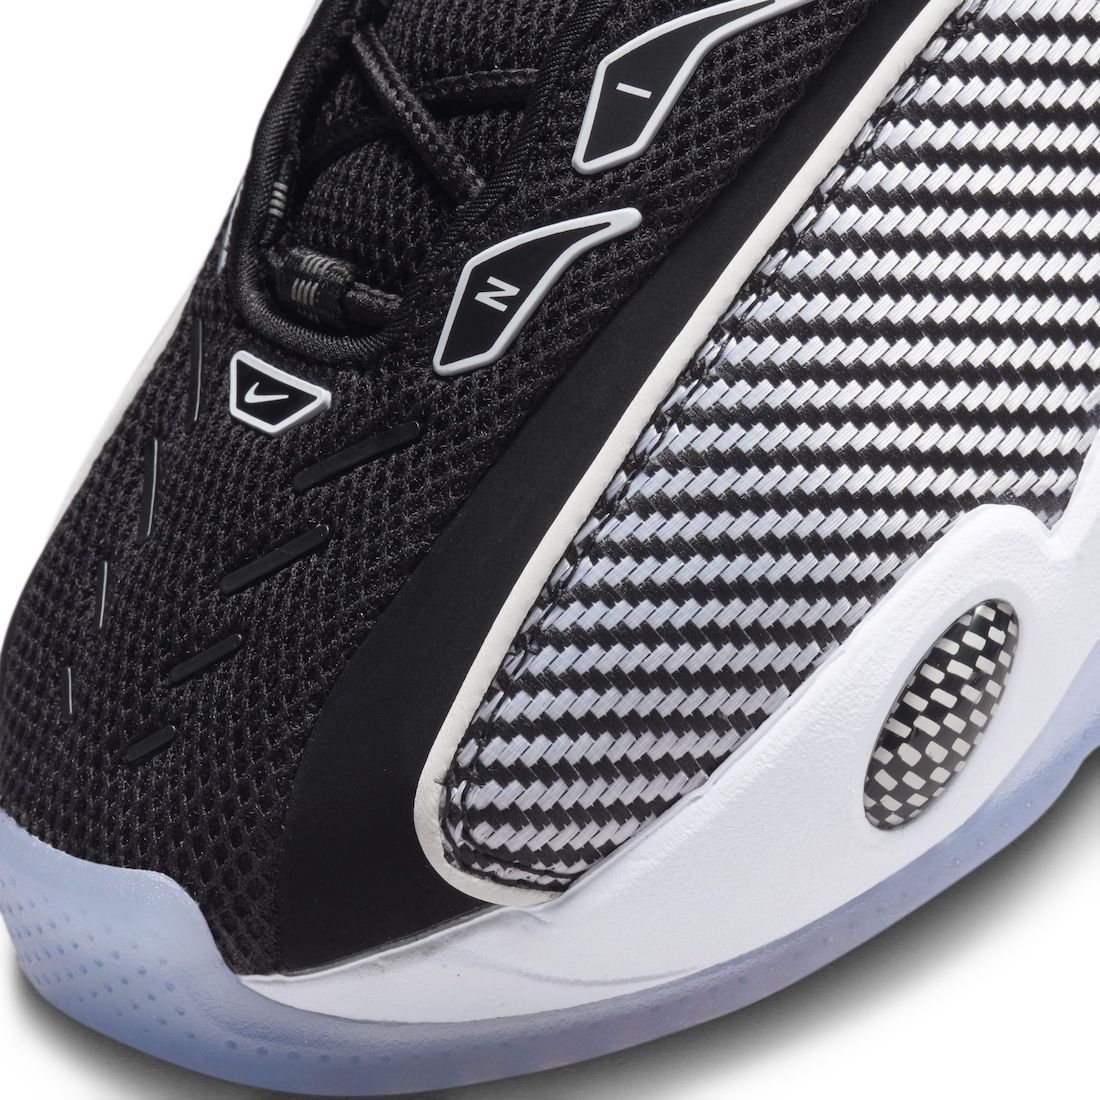 Nike-NOCTA-Glide-Black-White-DM0879-001-Release-Date-6.jpeg